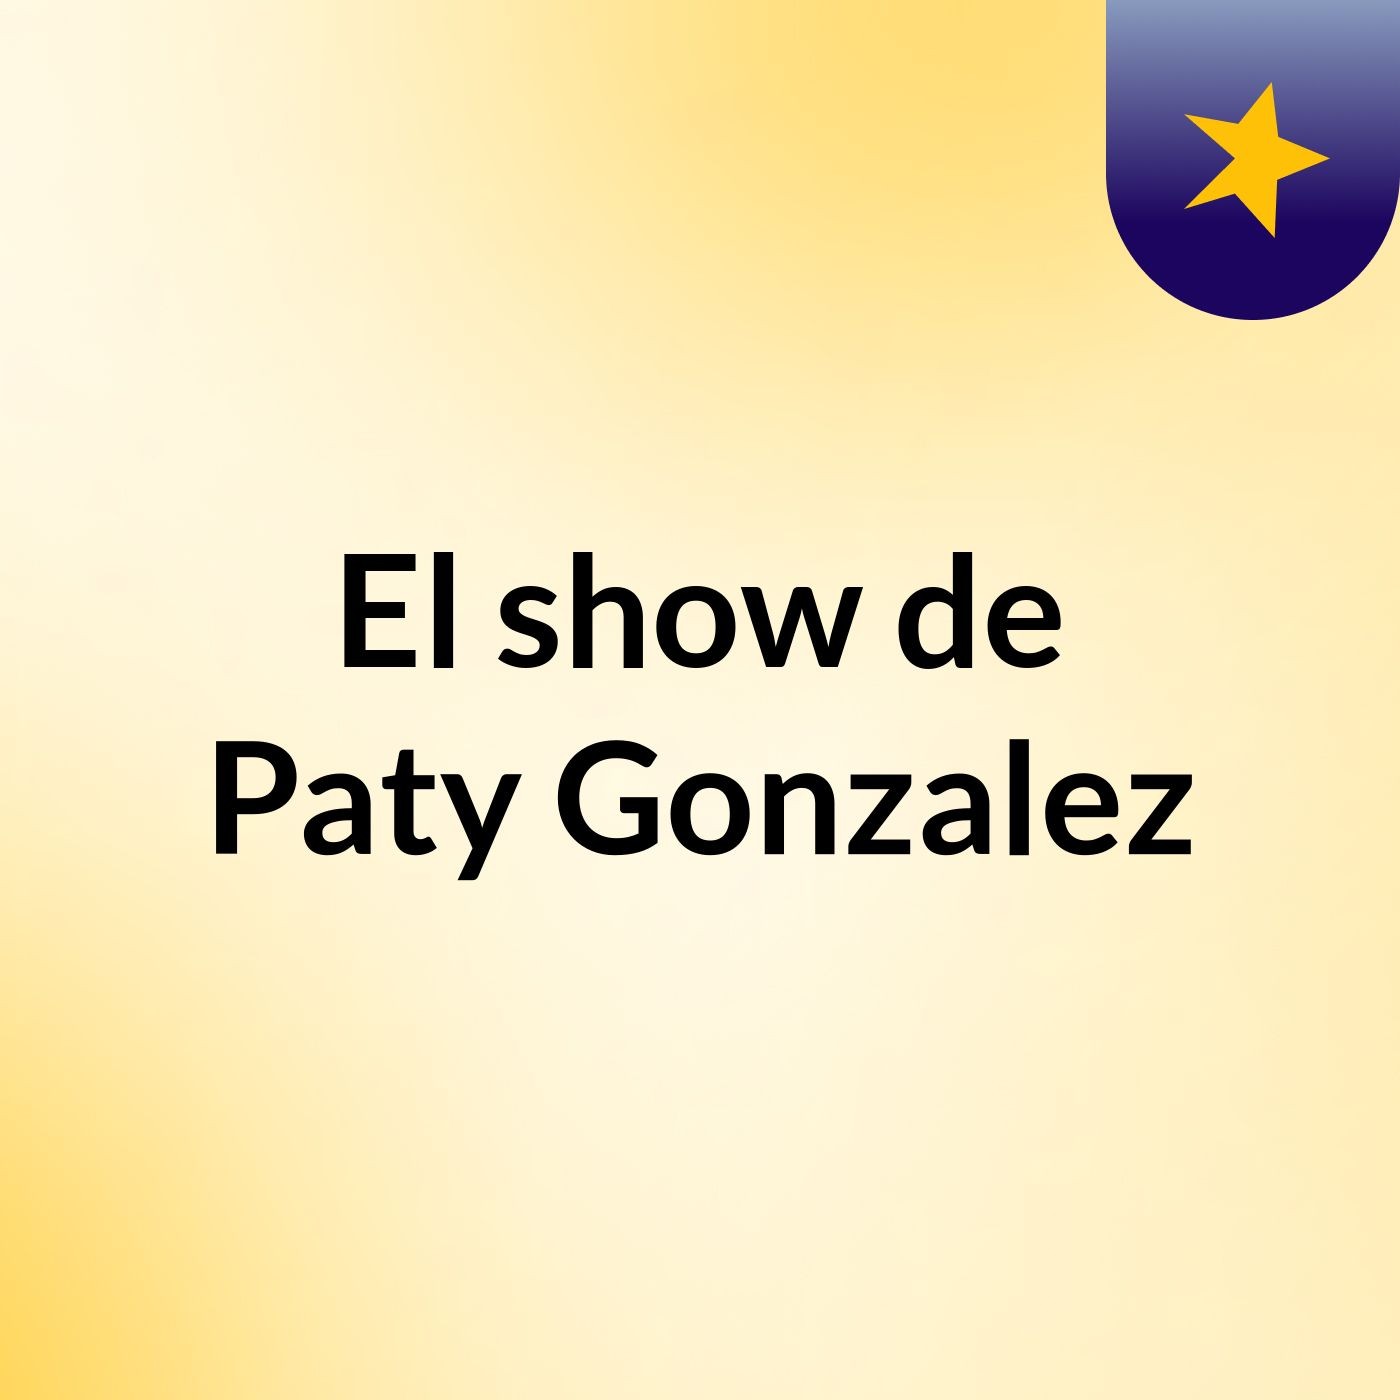 El show de Paty Gonzalez